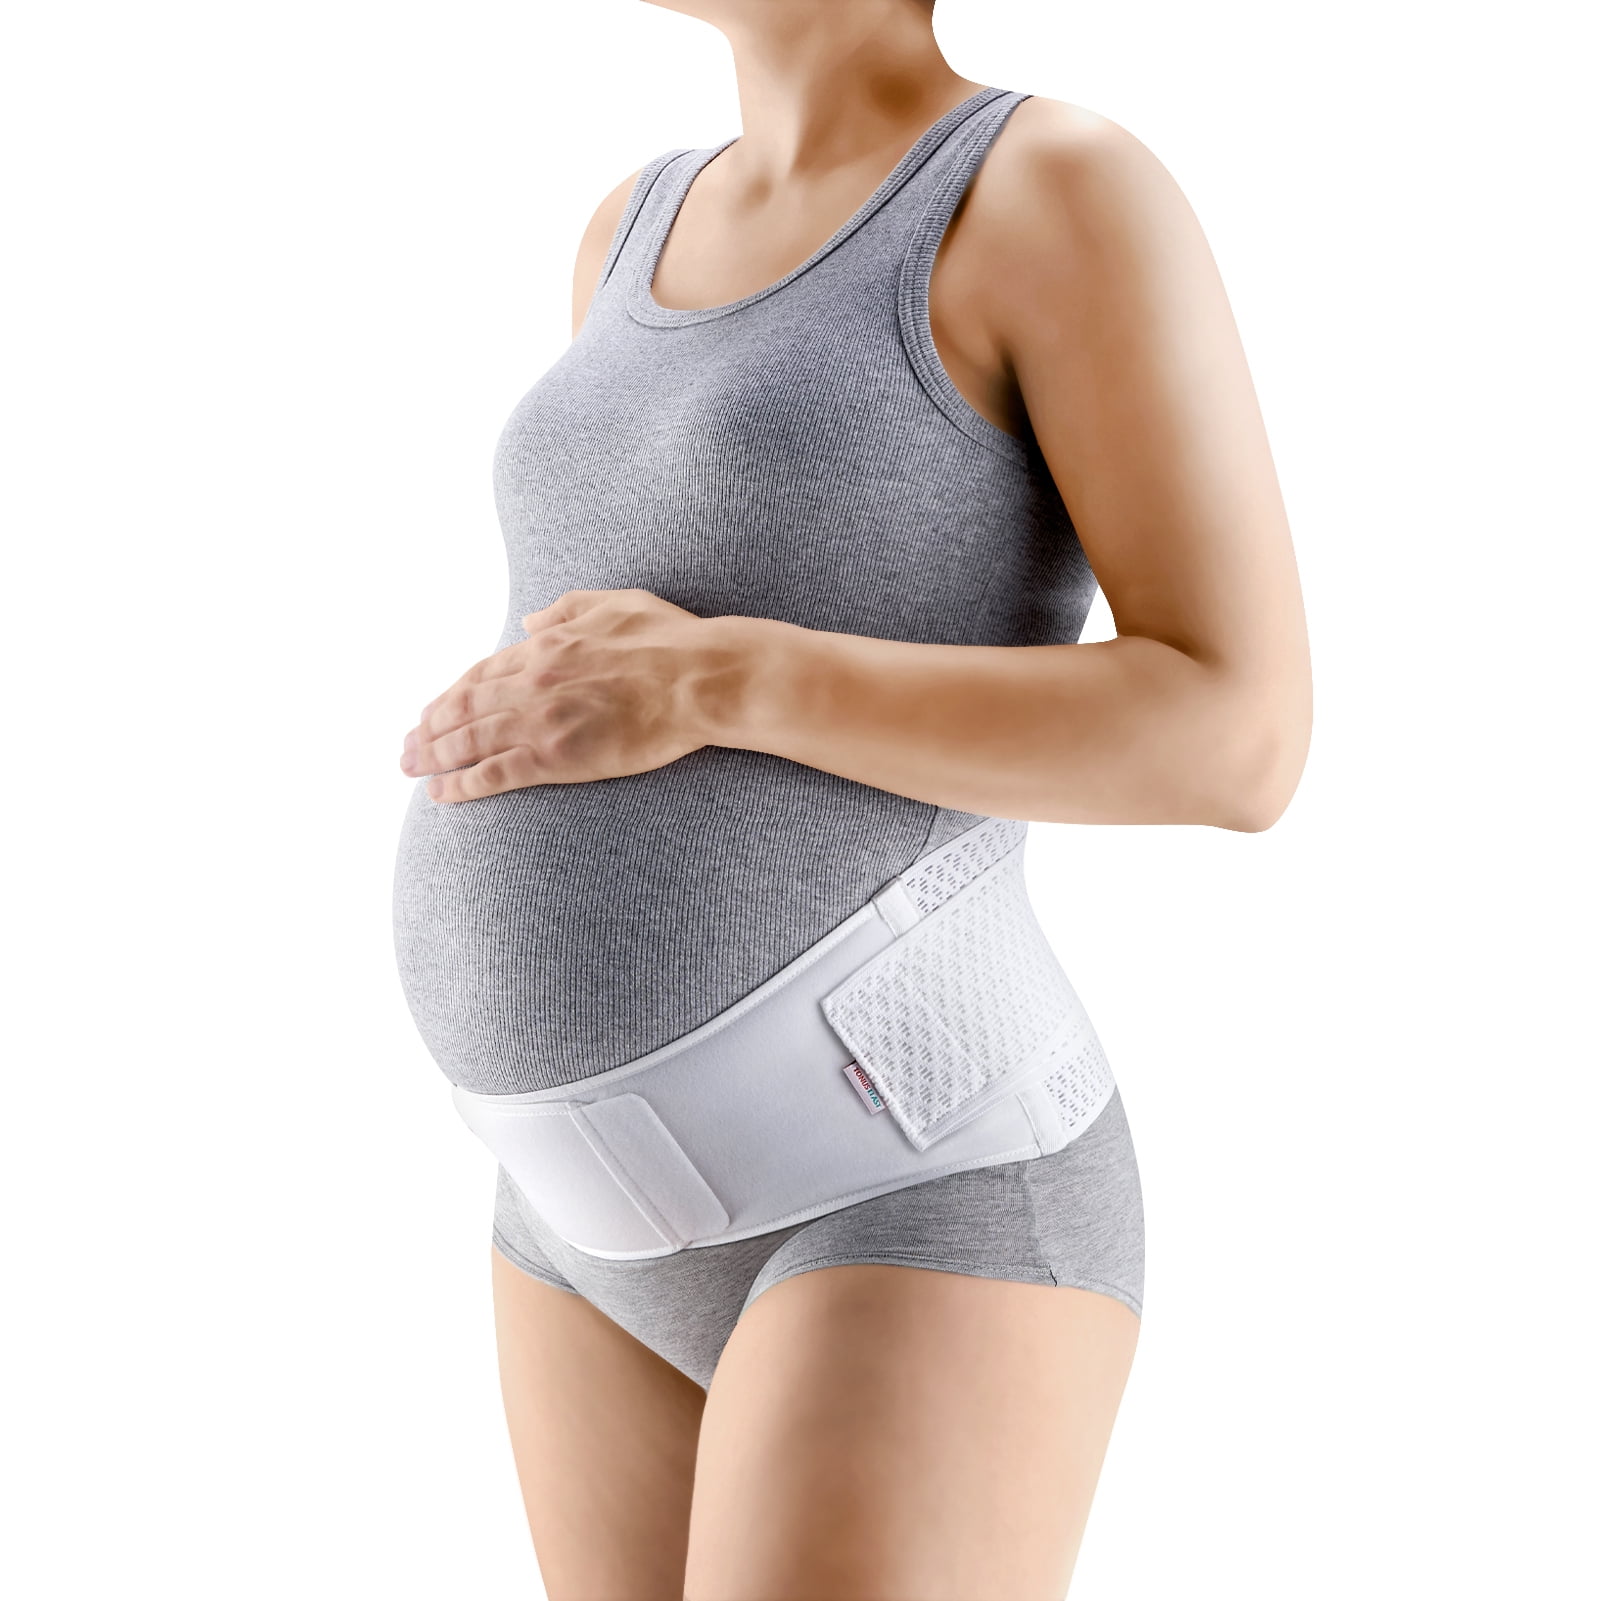 BORT Back Support for Pregnant Woman - Bort